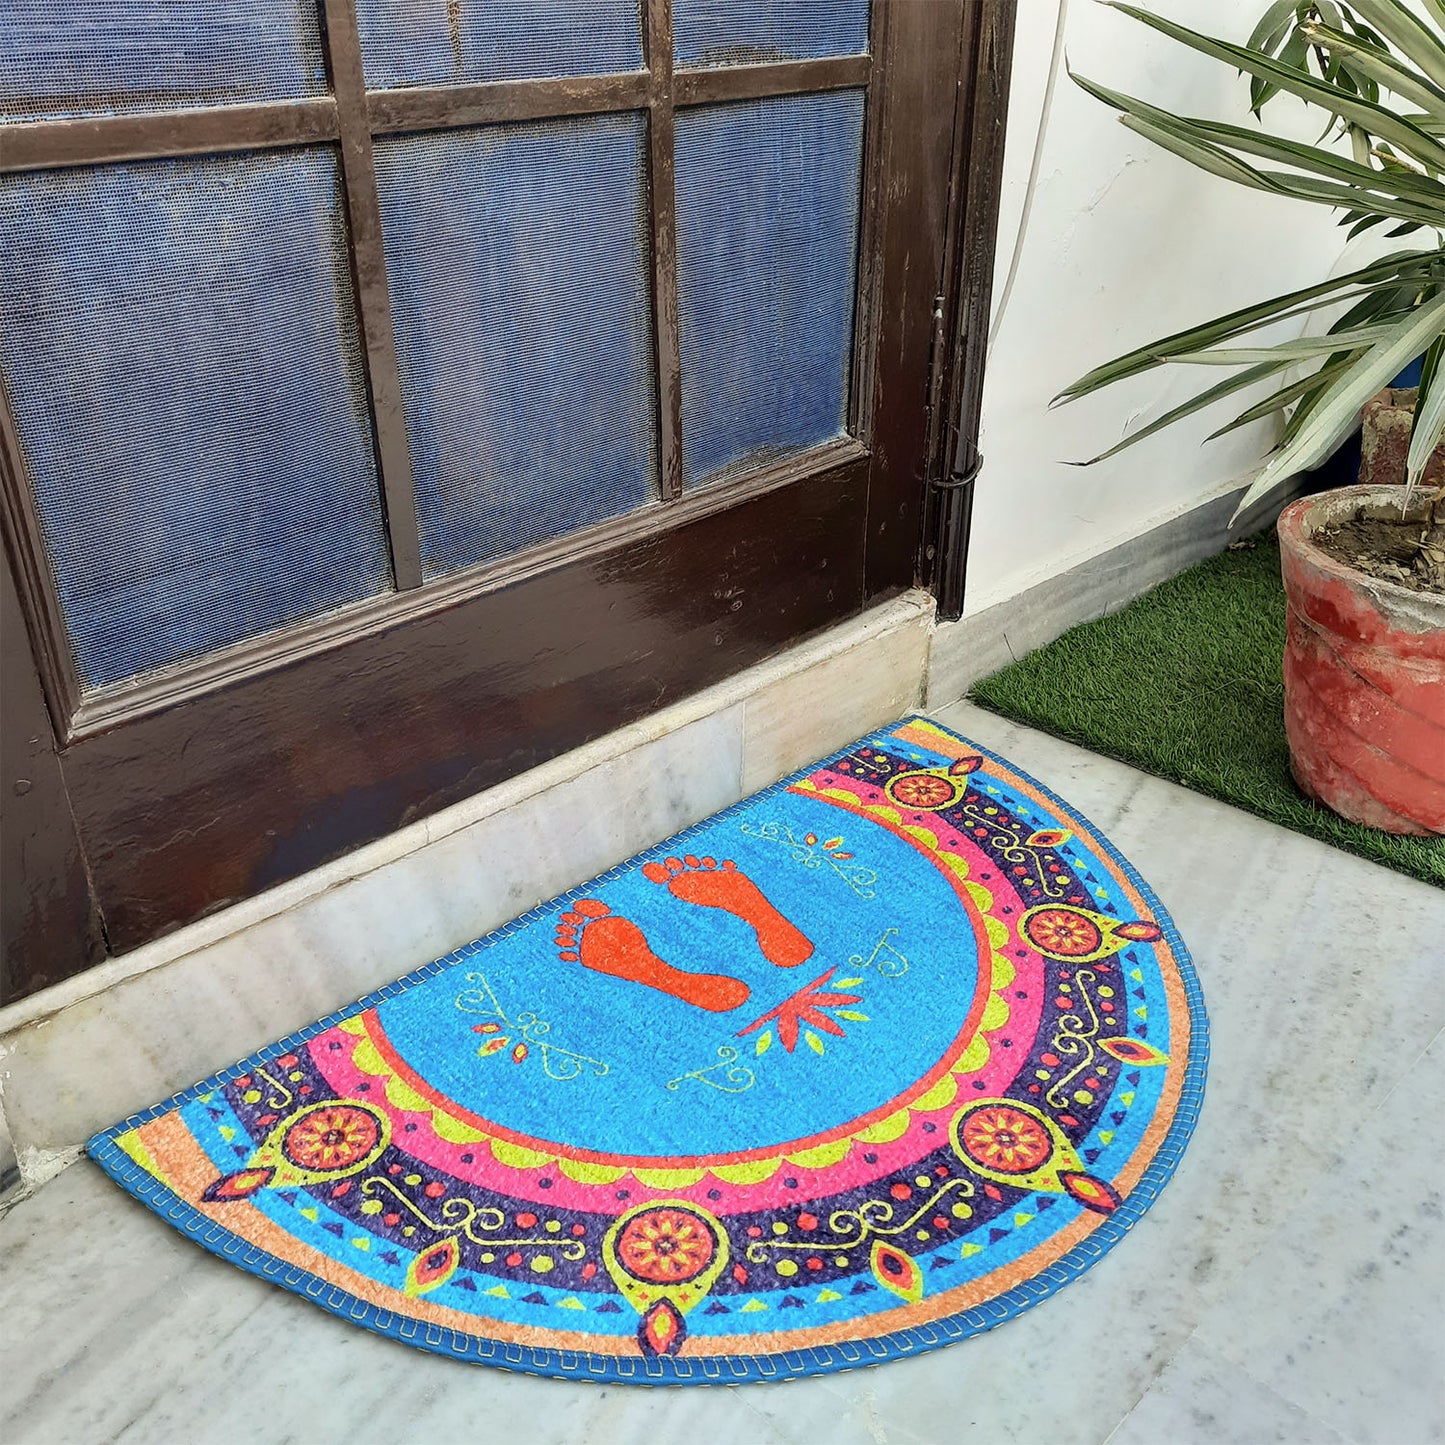 Avioni Home Floor Mats in Beautiful Traditional Lakshmi Padma (Feet) Design | Anti Slip, Durable & Washable | Outdoor & Indoor